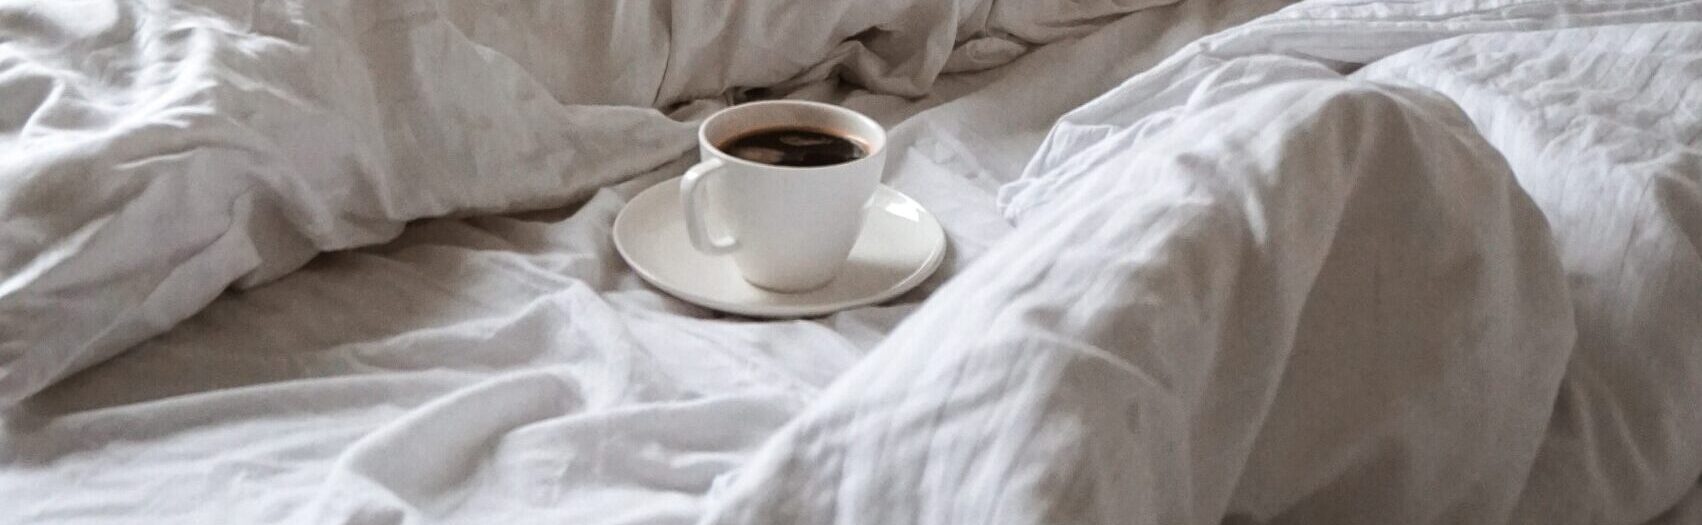 Koffie op bed